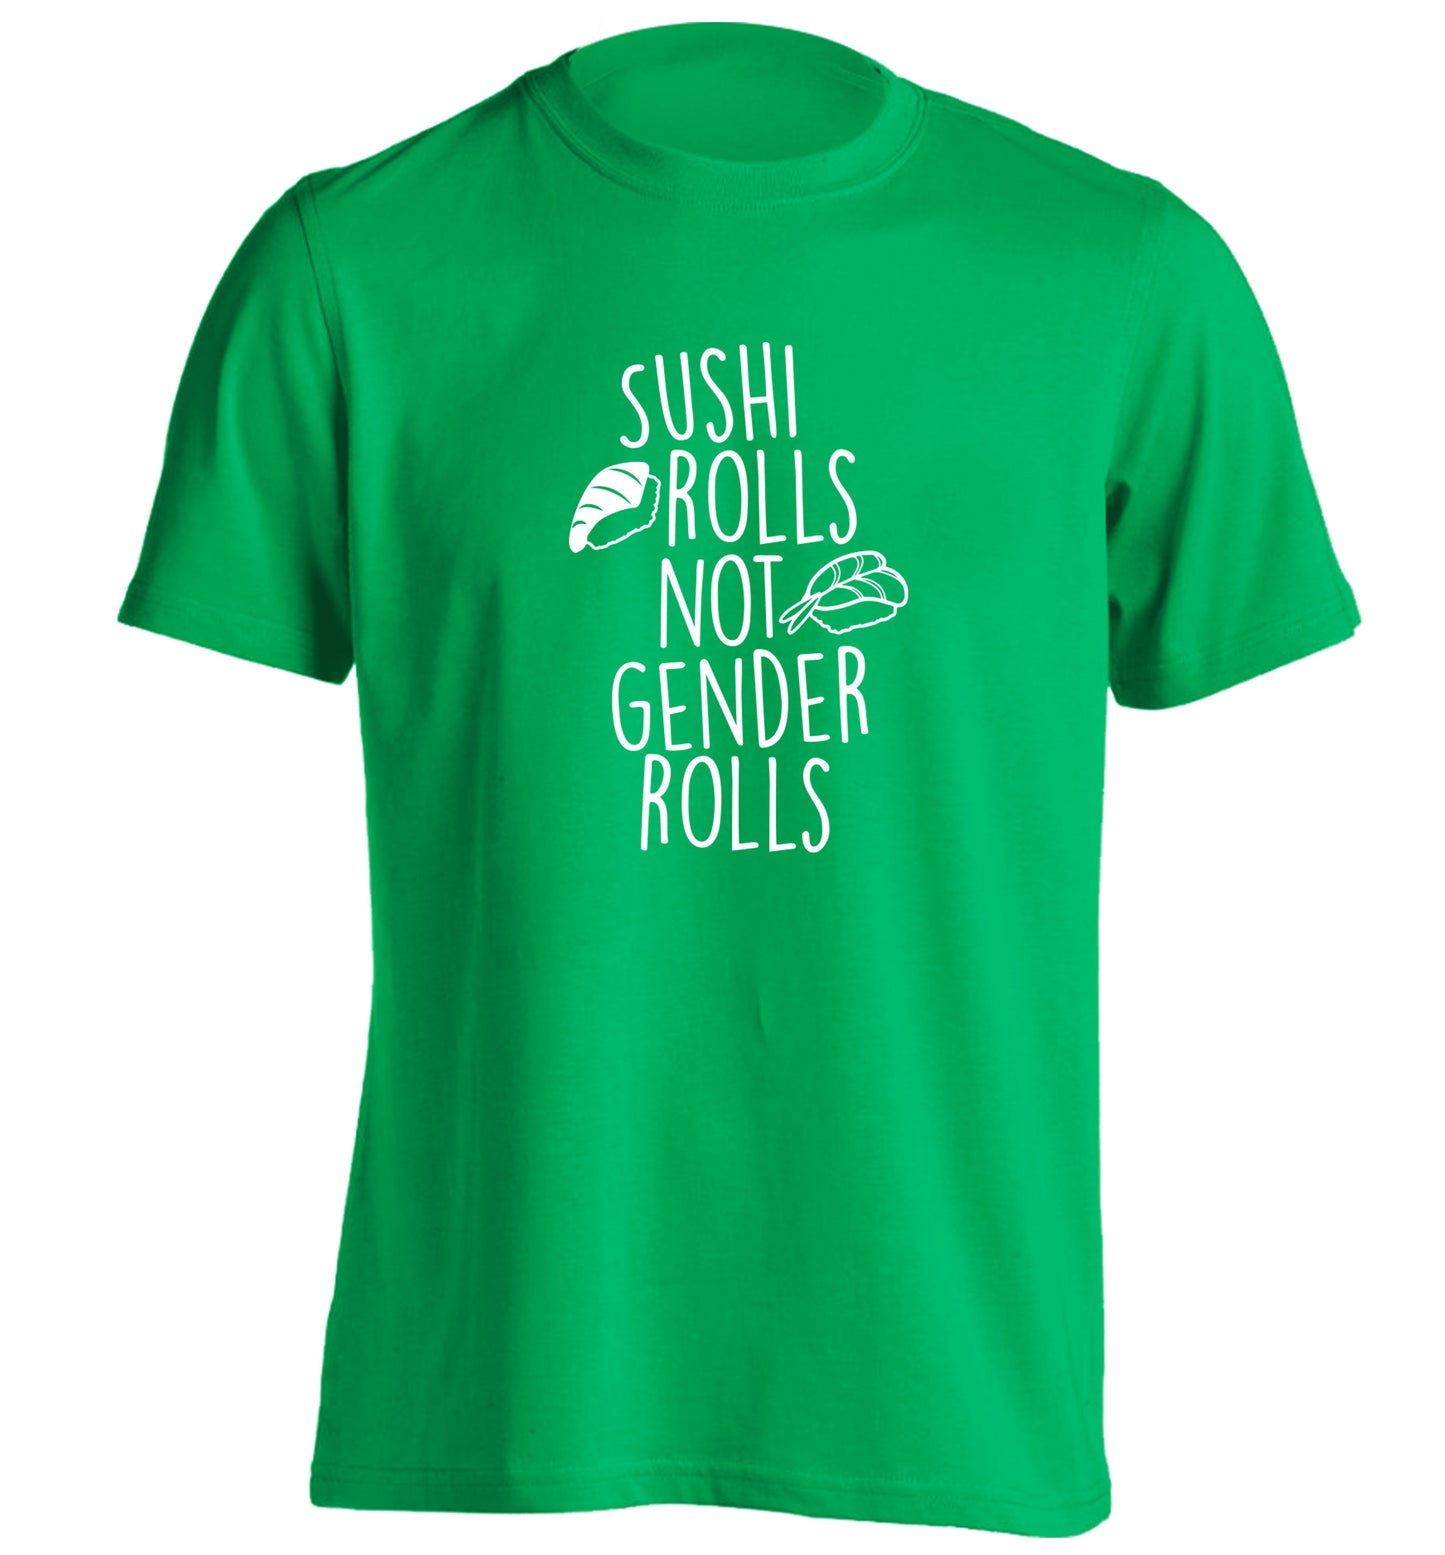 Sushi rolls not gender rolls adults unisex green Tshirt 2XL